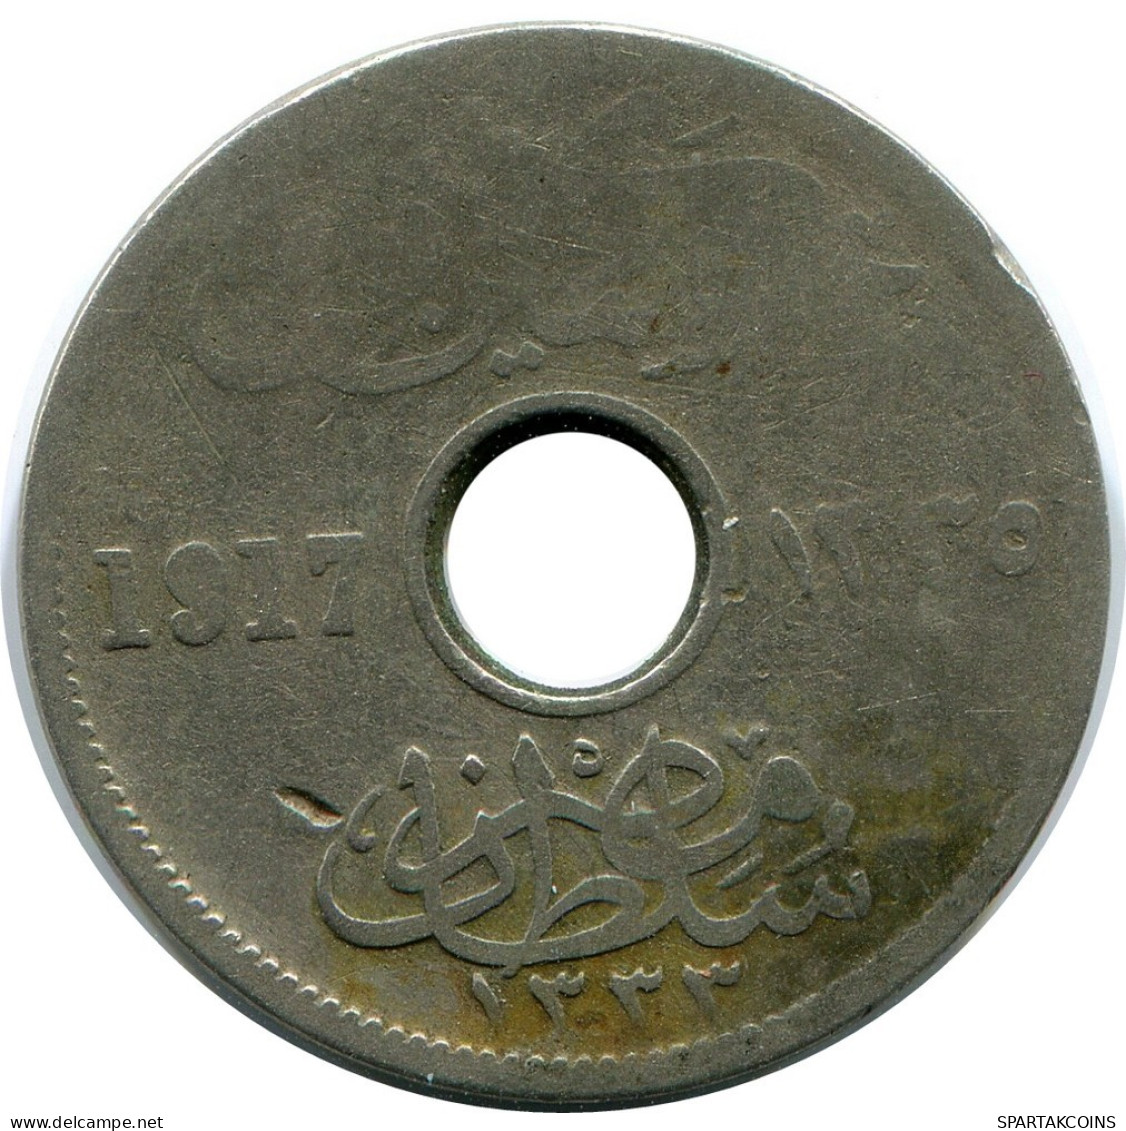 5 MILLIEMES 1917 EGIPTO EGYPT Moneda Hussein Kamil #AP153.E.A - Egitto